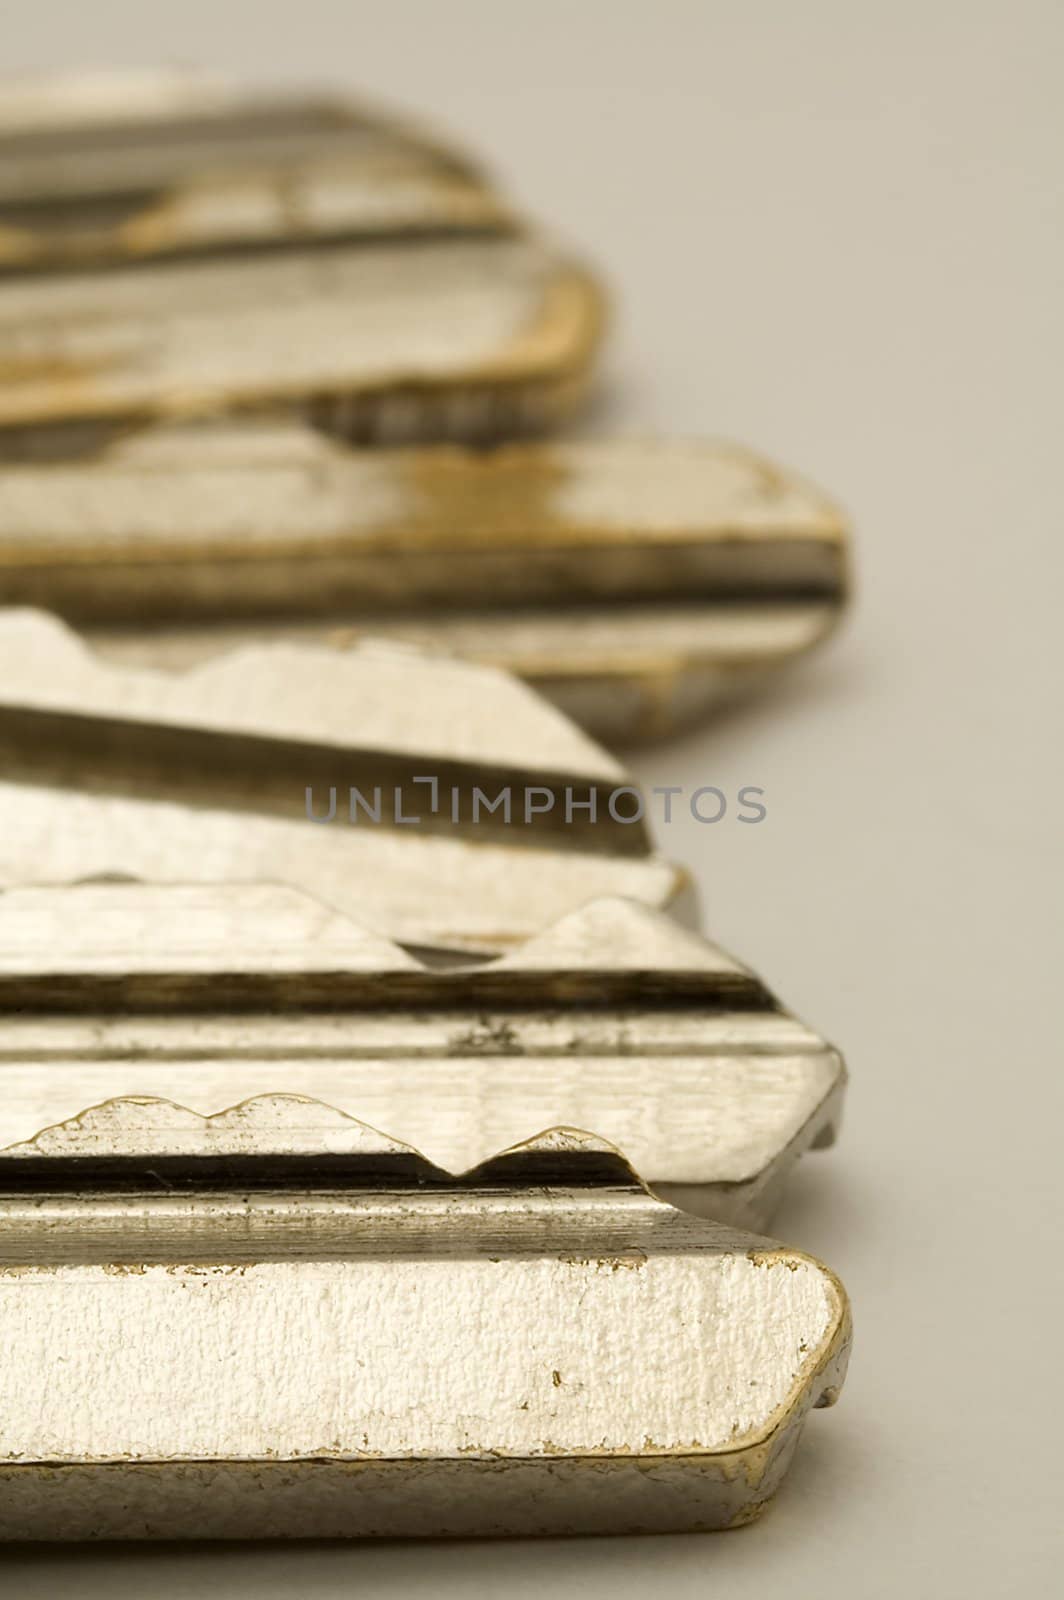 several old metal keys detail photo, distance blur